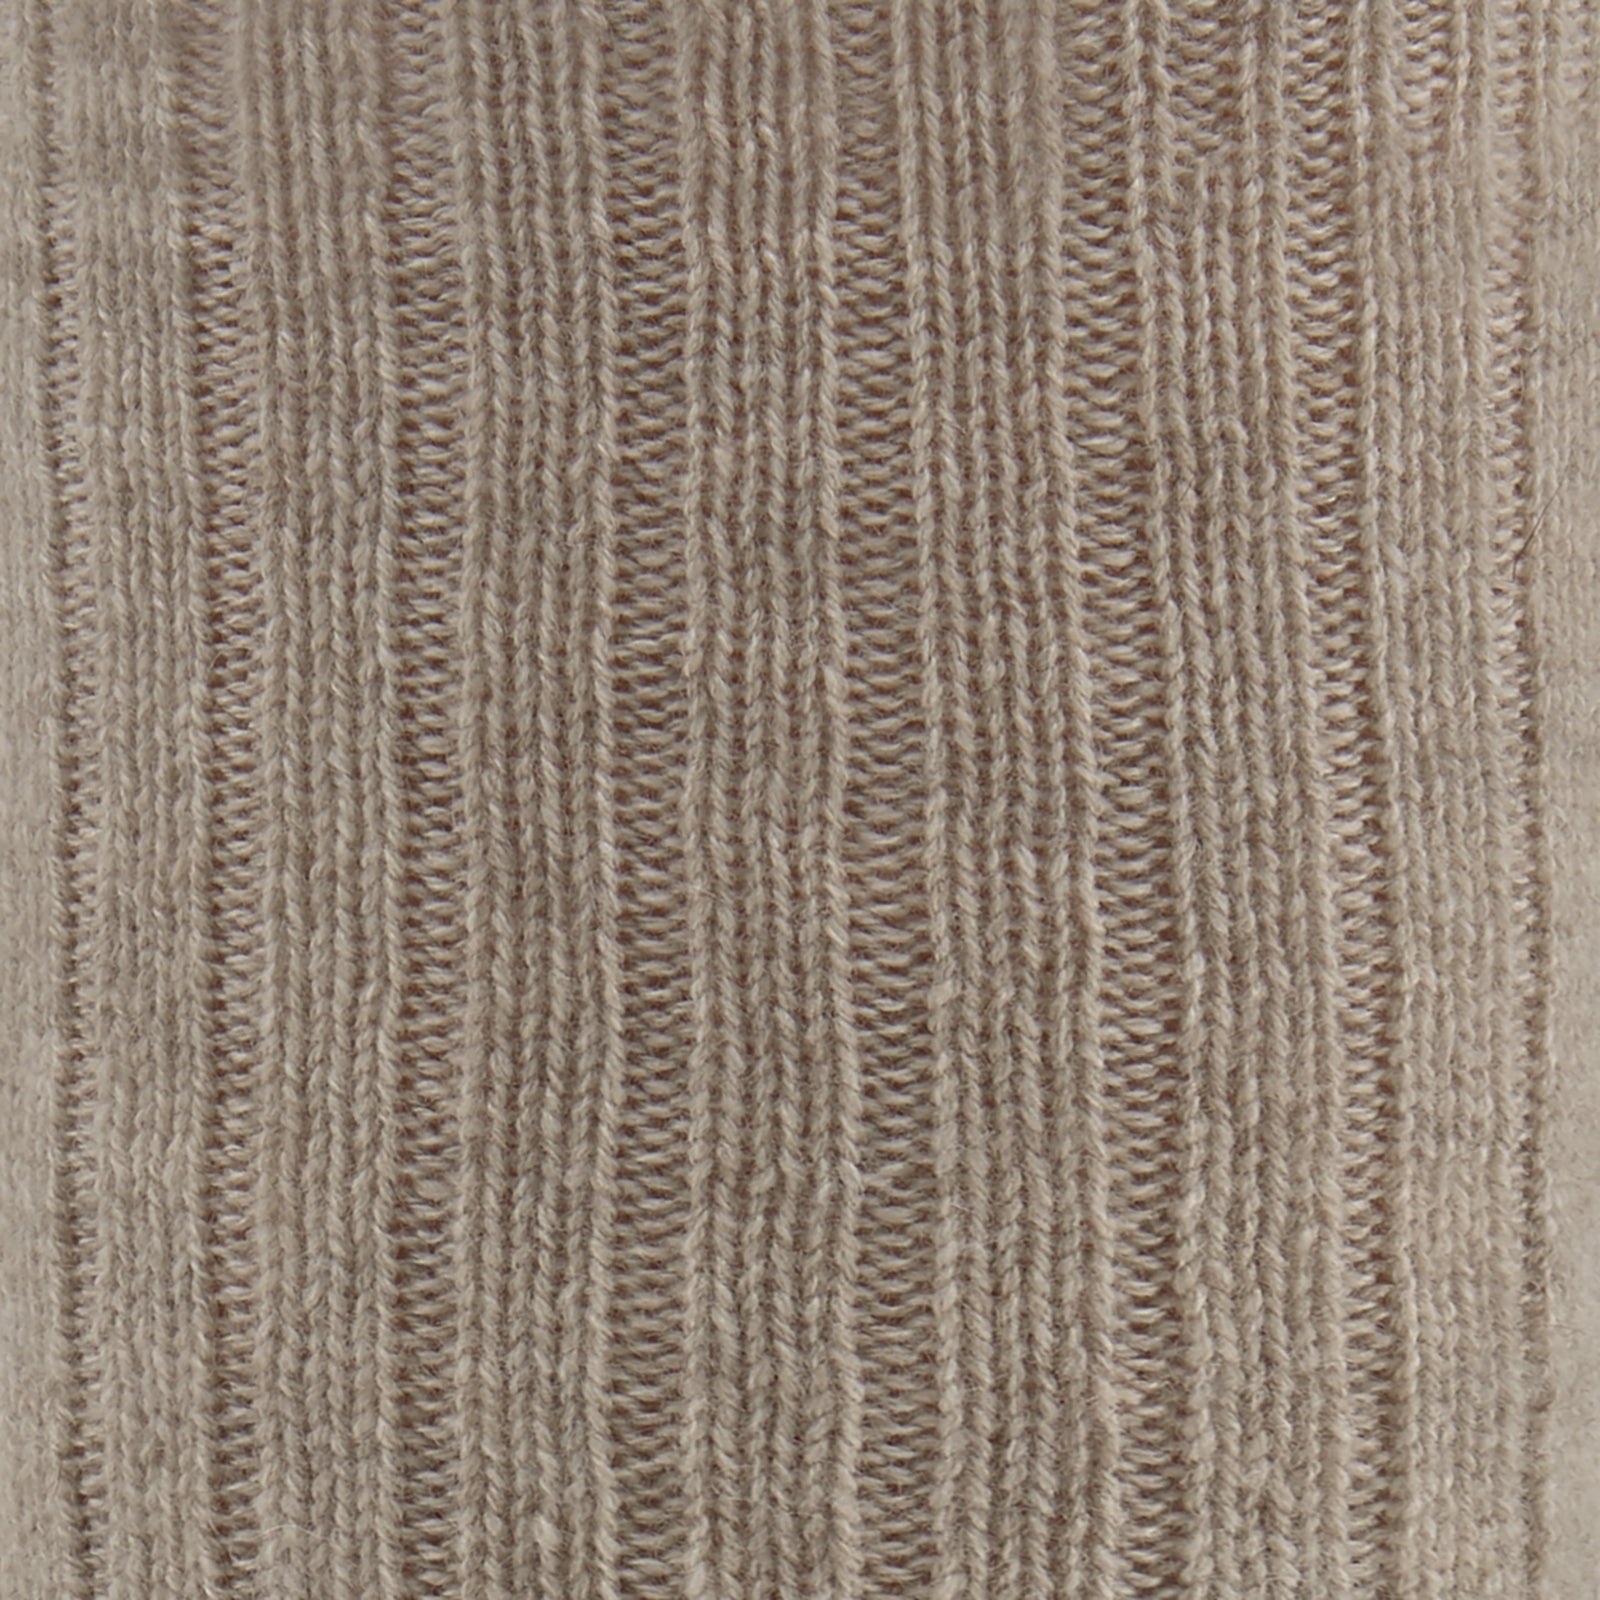 Light Brown 3/4 Length Cashmere Socks